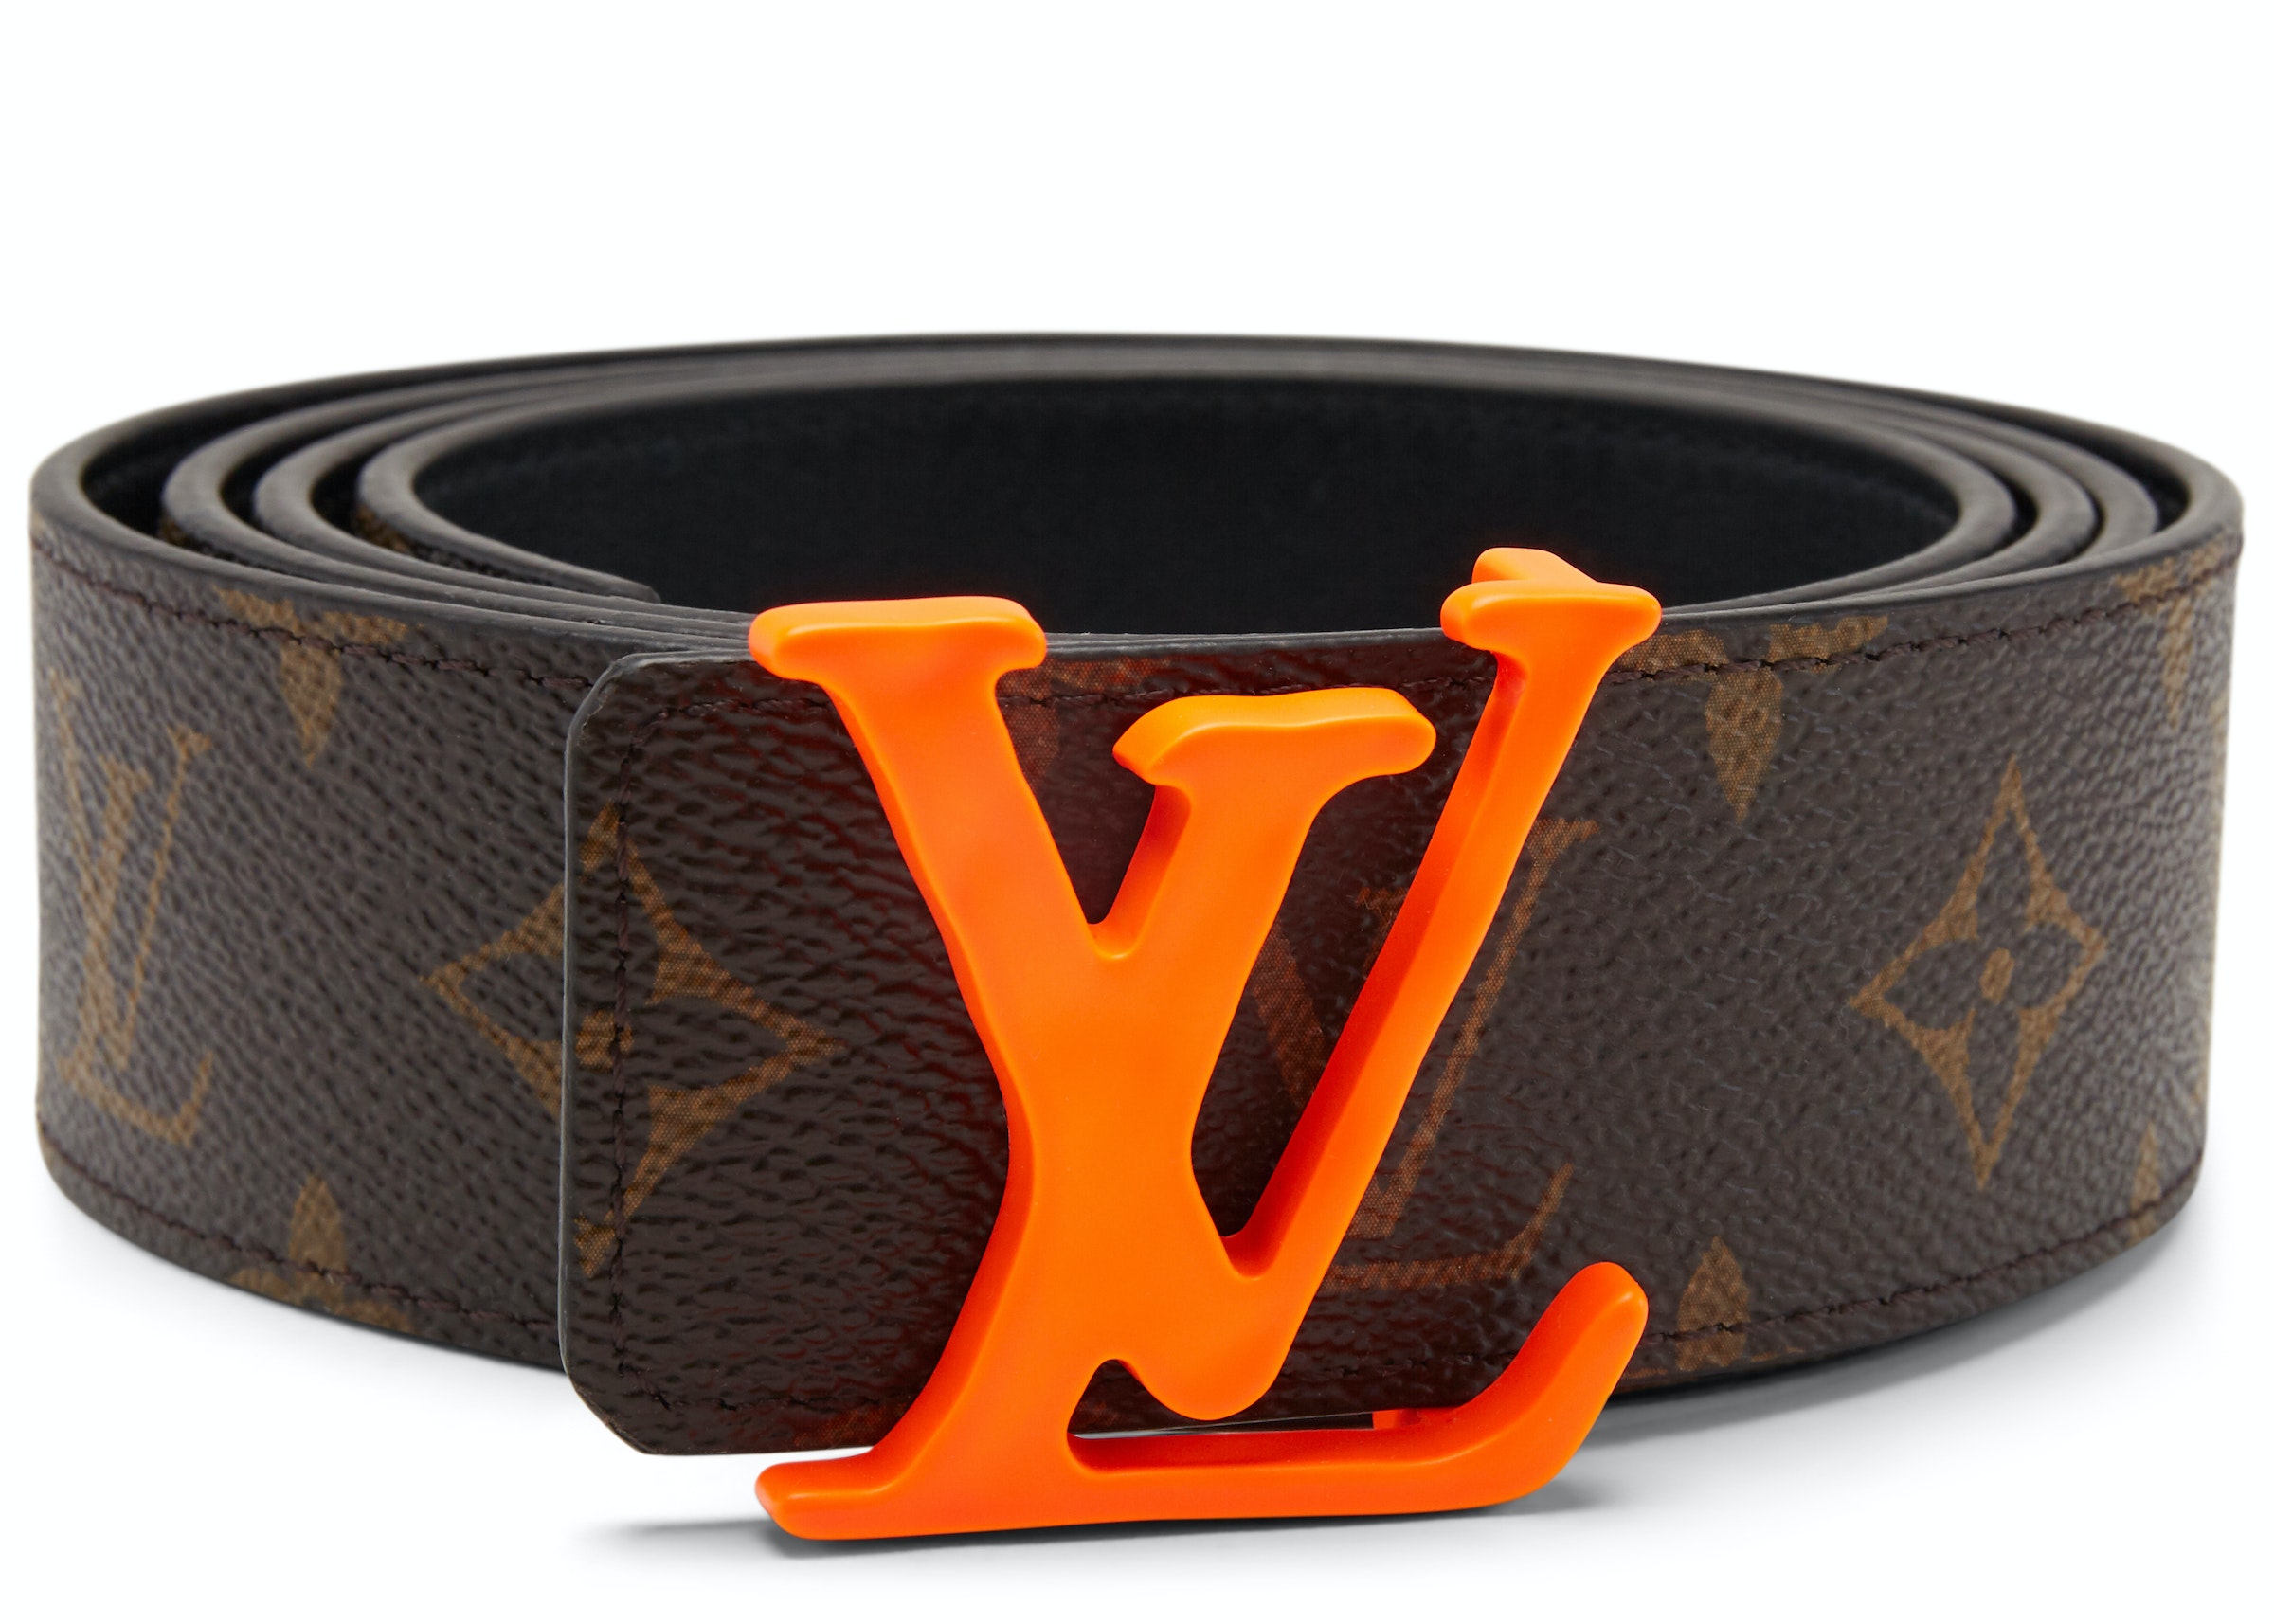 Buy Louis Vuitton Other Belt Accessories - highest bid - StockX